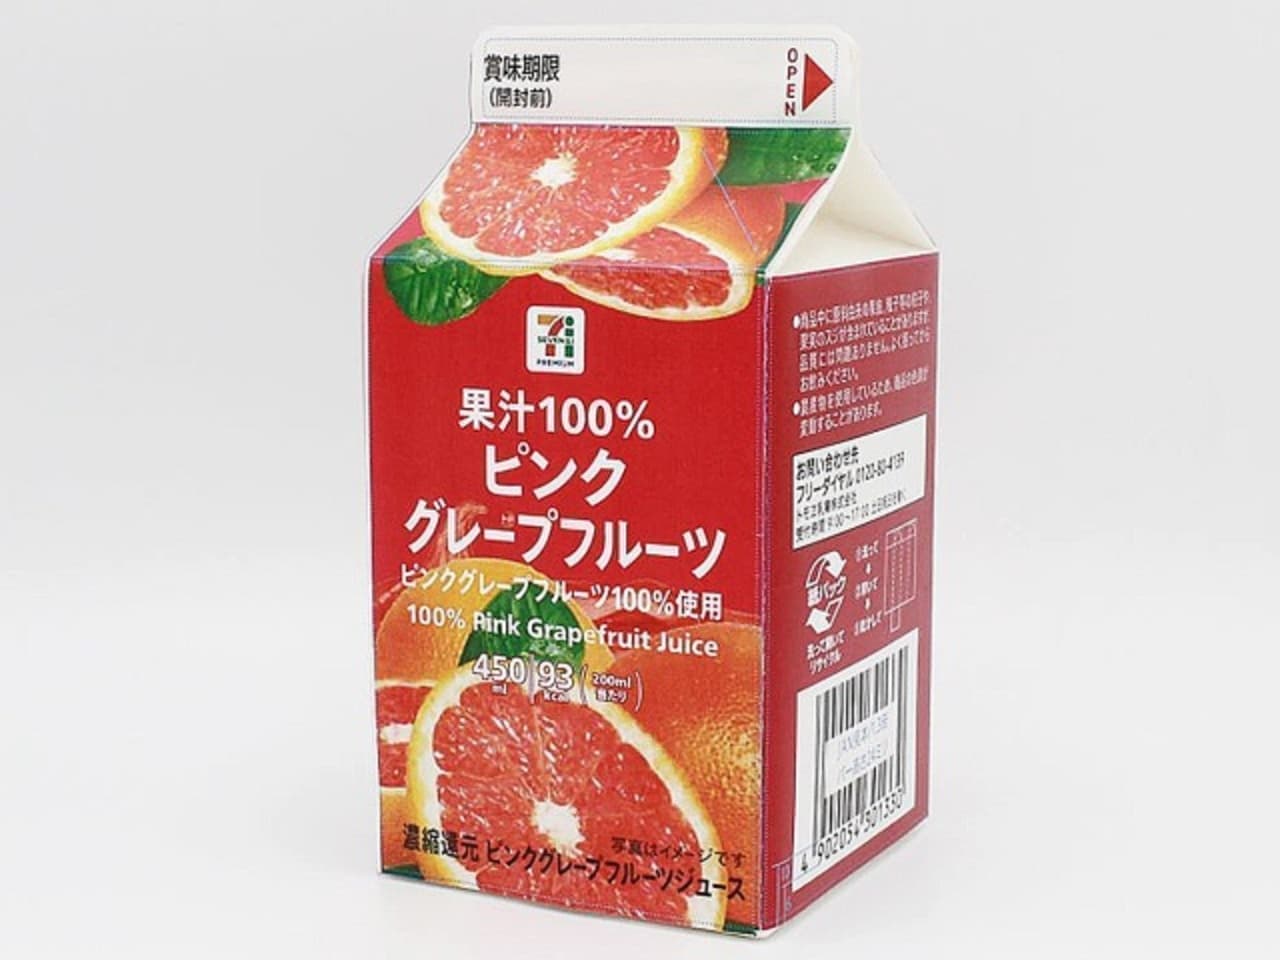 7-Eleven "7P Pink Grapefruit 450ml